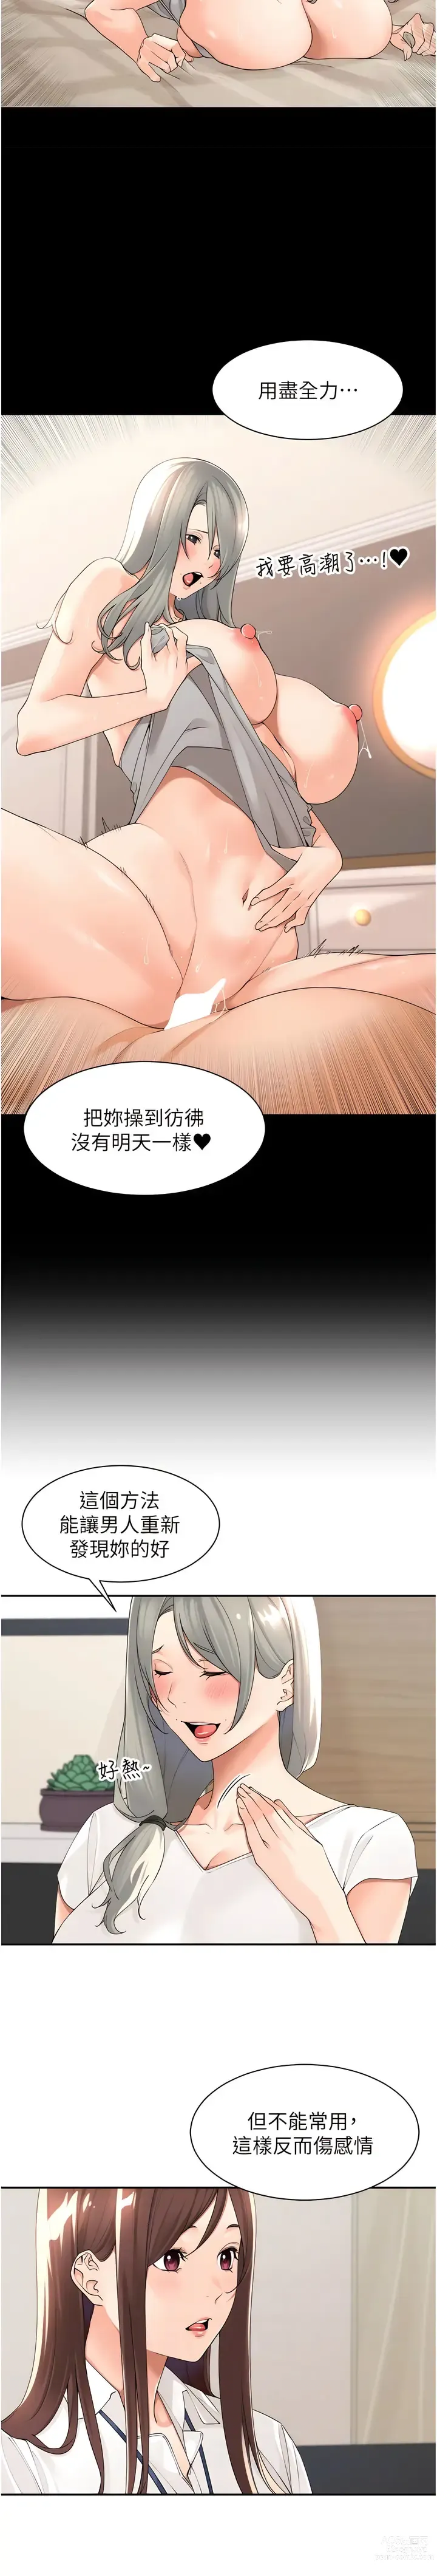 Page 47 of manga 工做狂女上司 19-22話